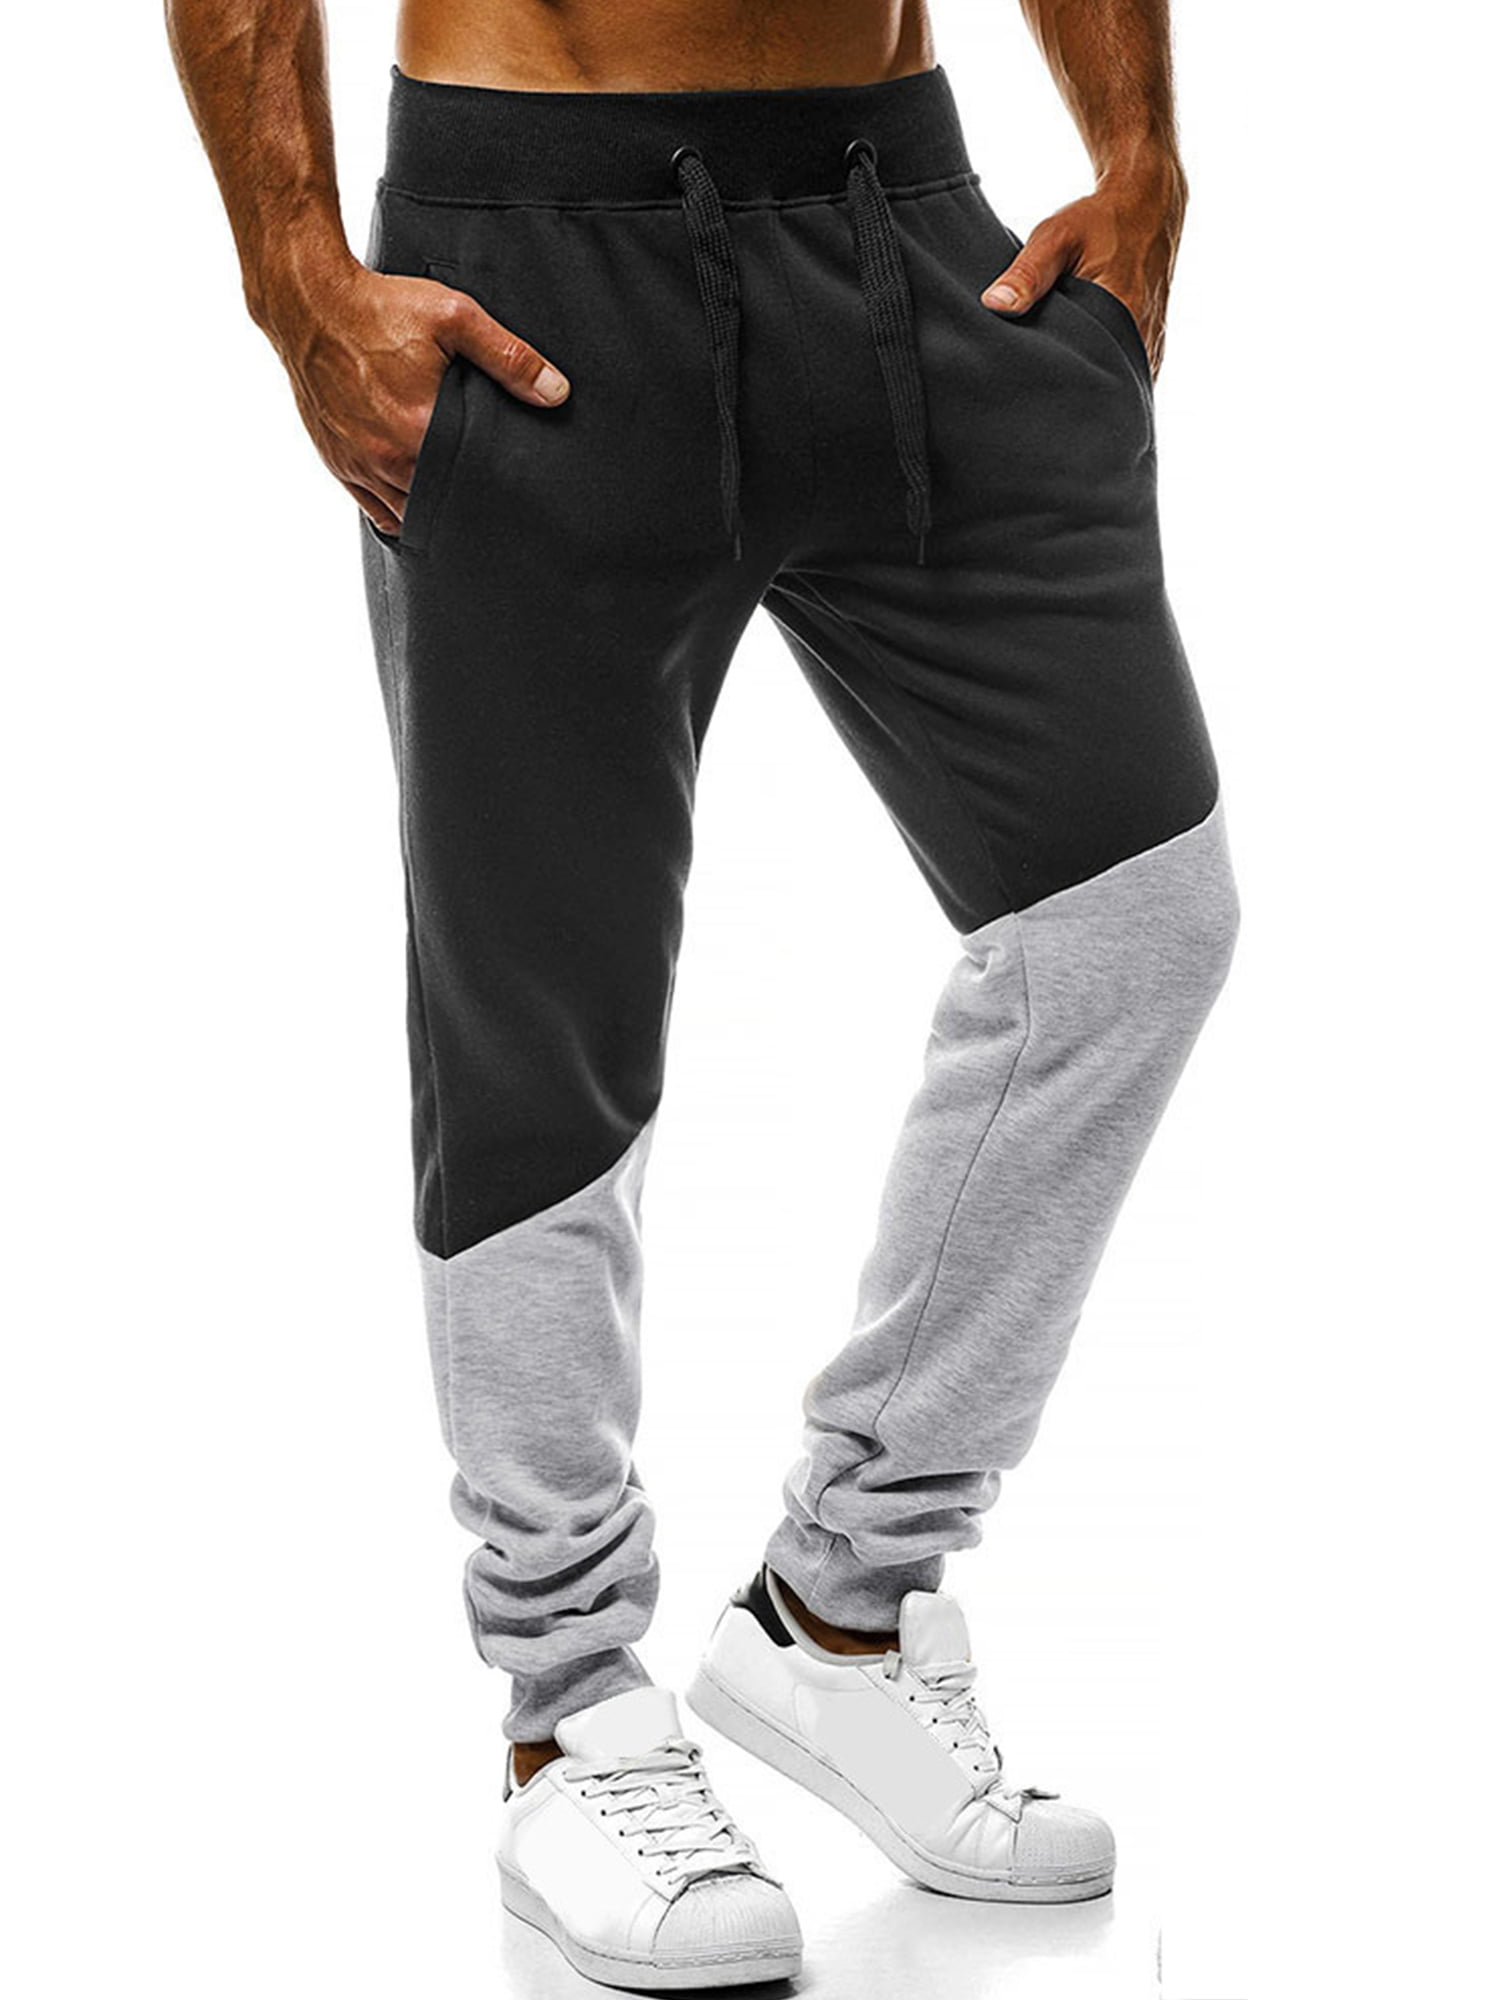 Mens Black Joggers Sweat Pants Gym Sports Sweatpants Casual Trousers Apparel